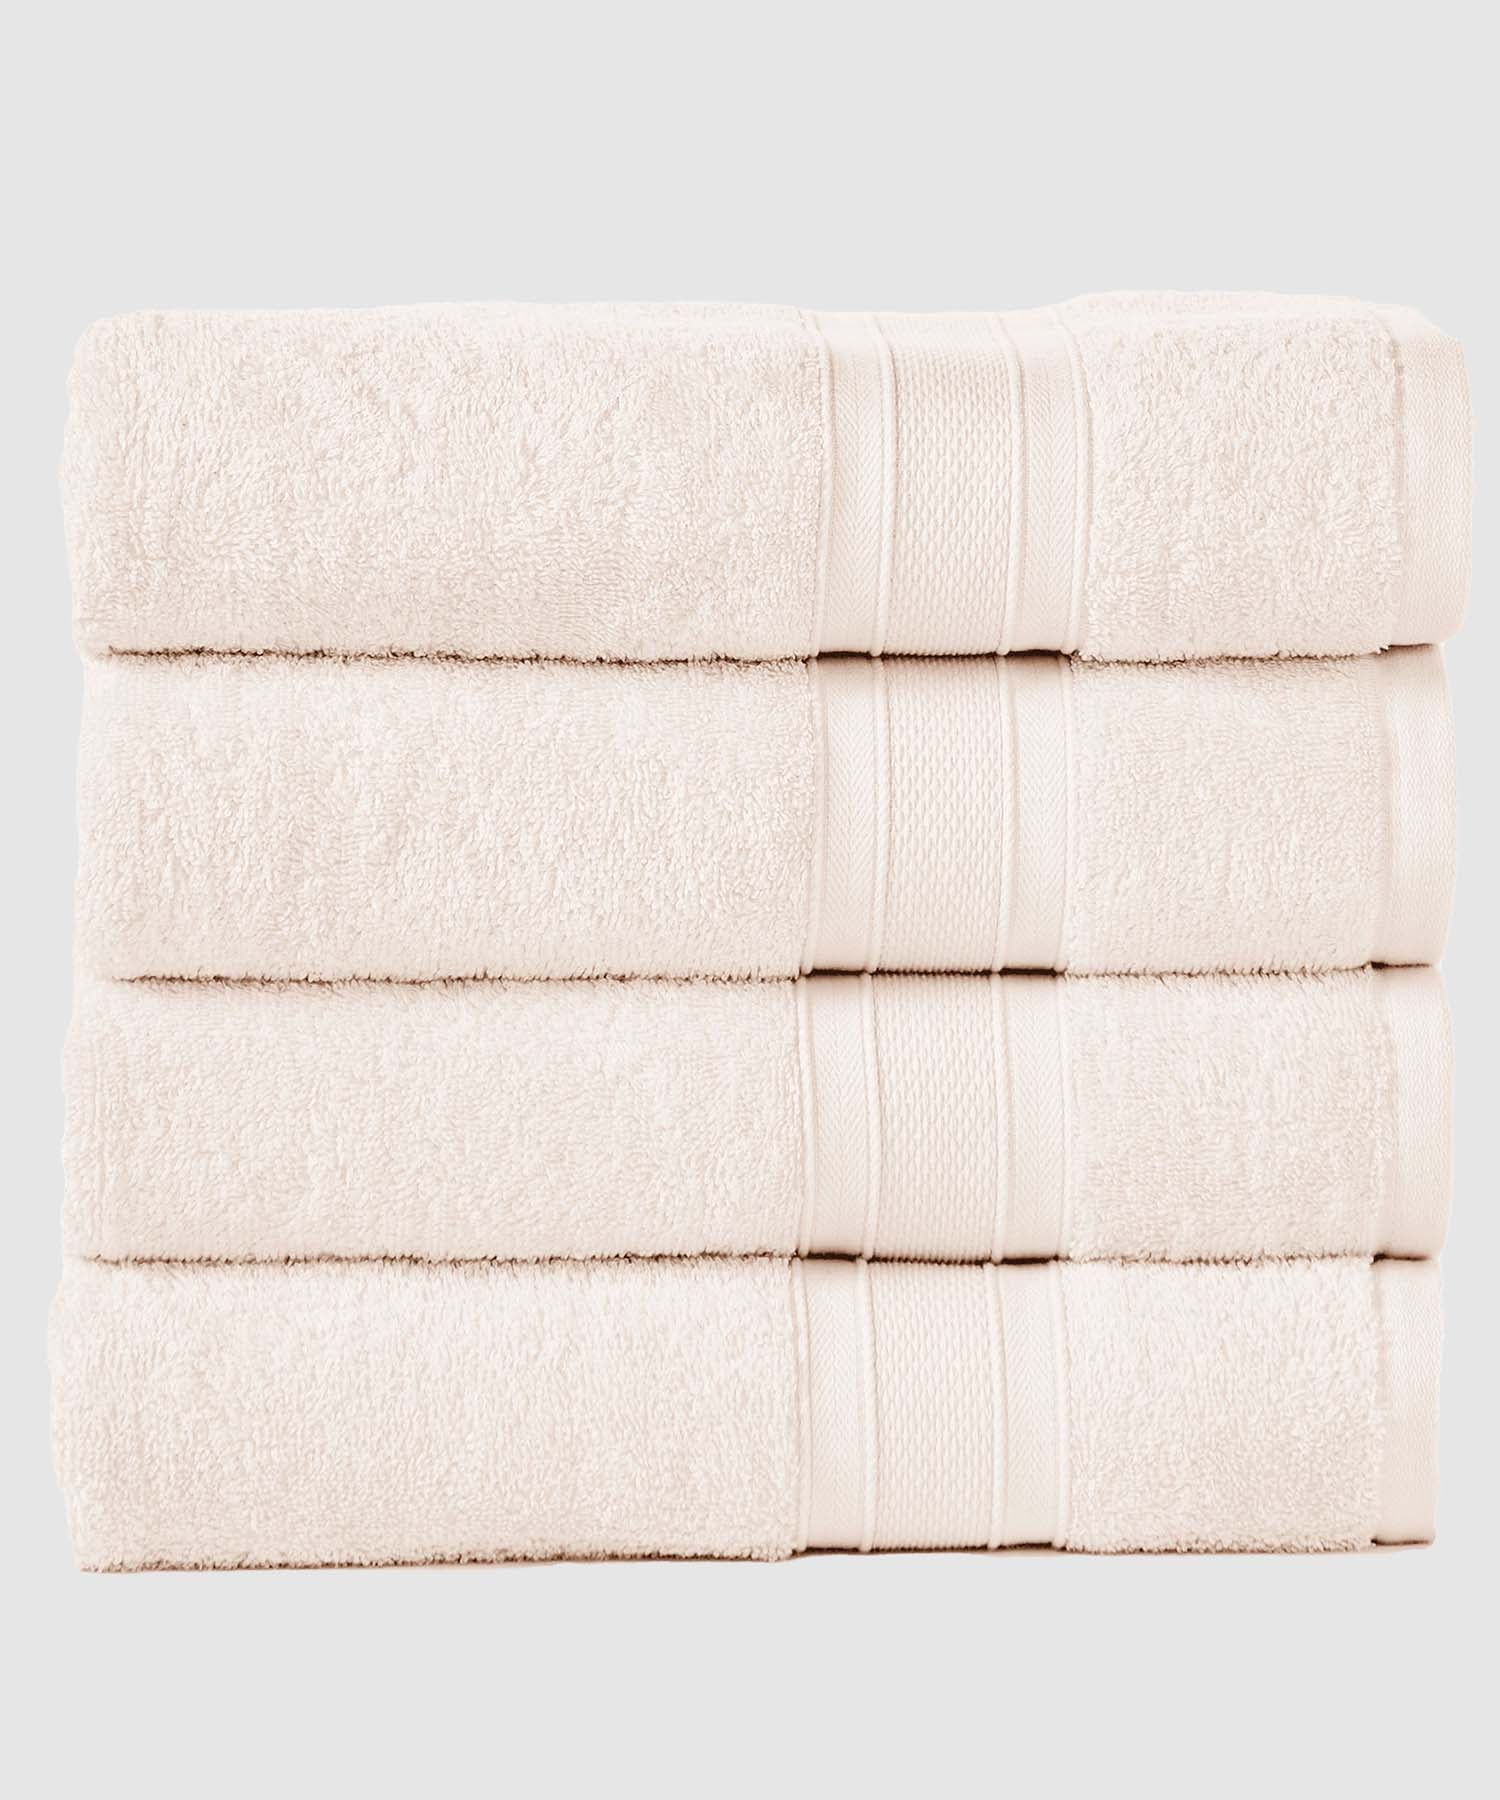 4Pc Towel Set ₹1899/-